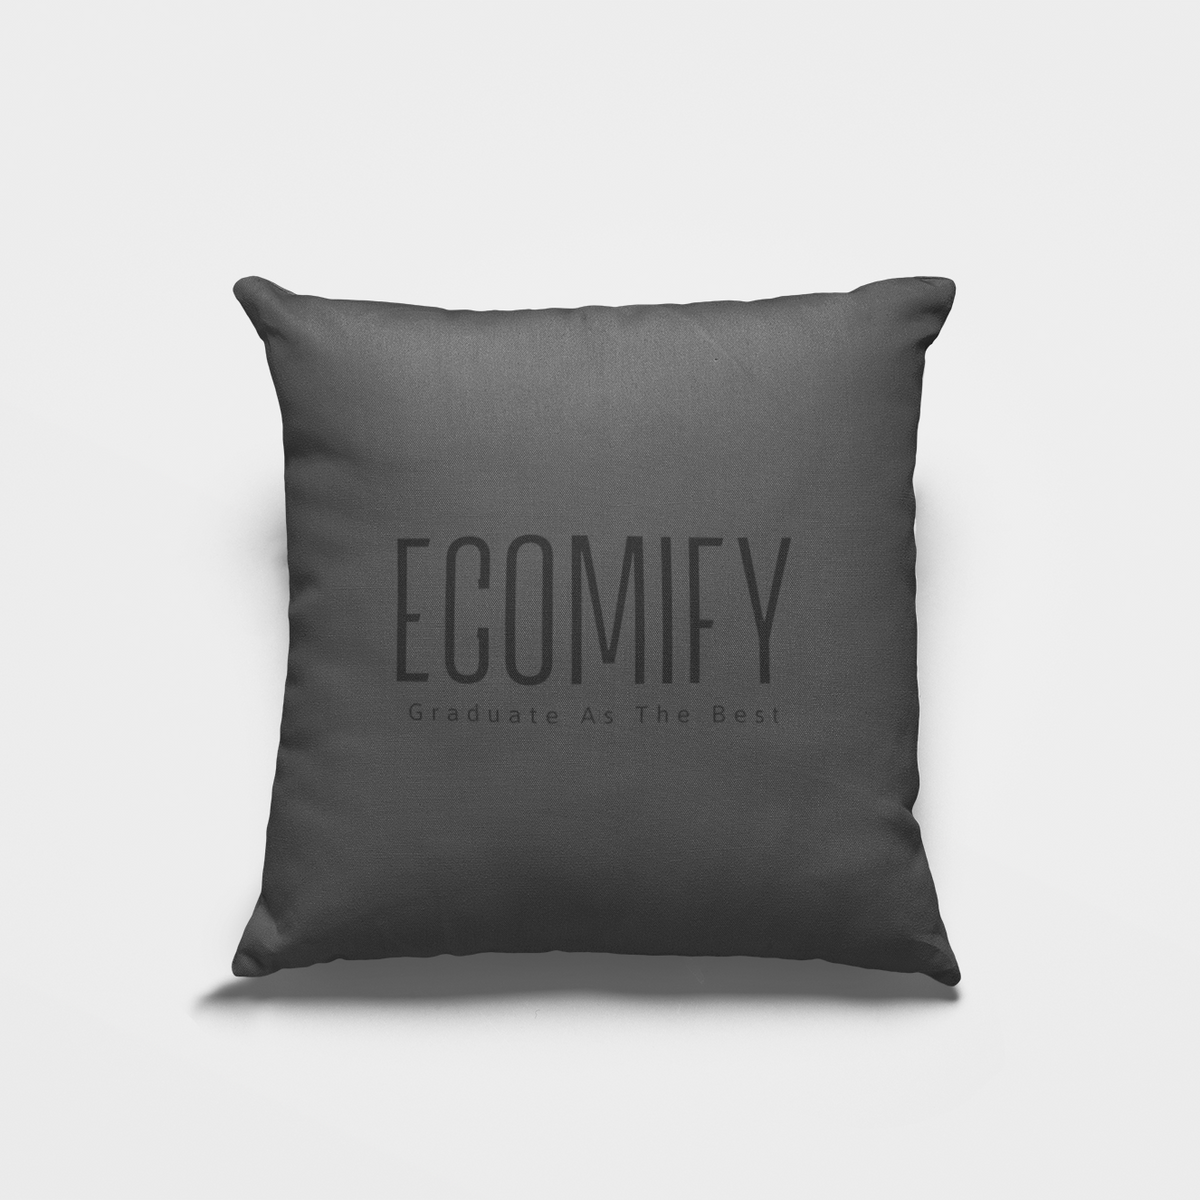 Ecomify™ Pillow